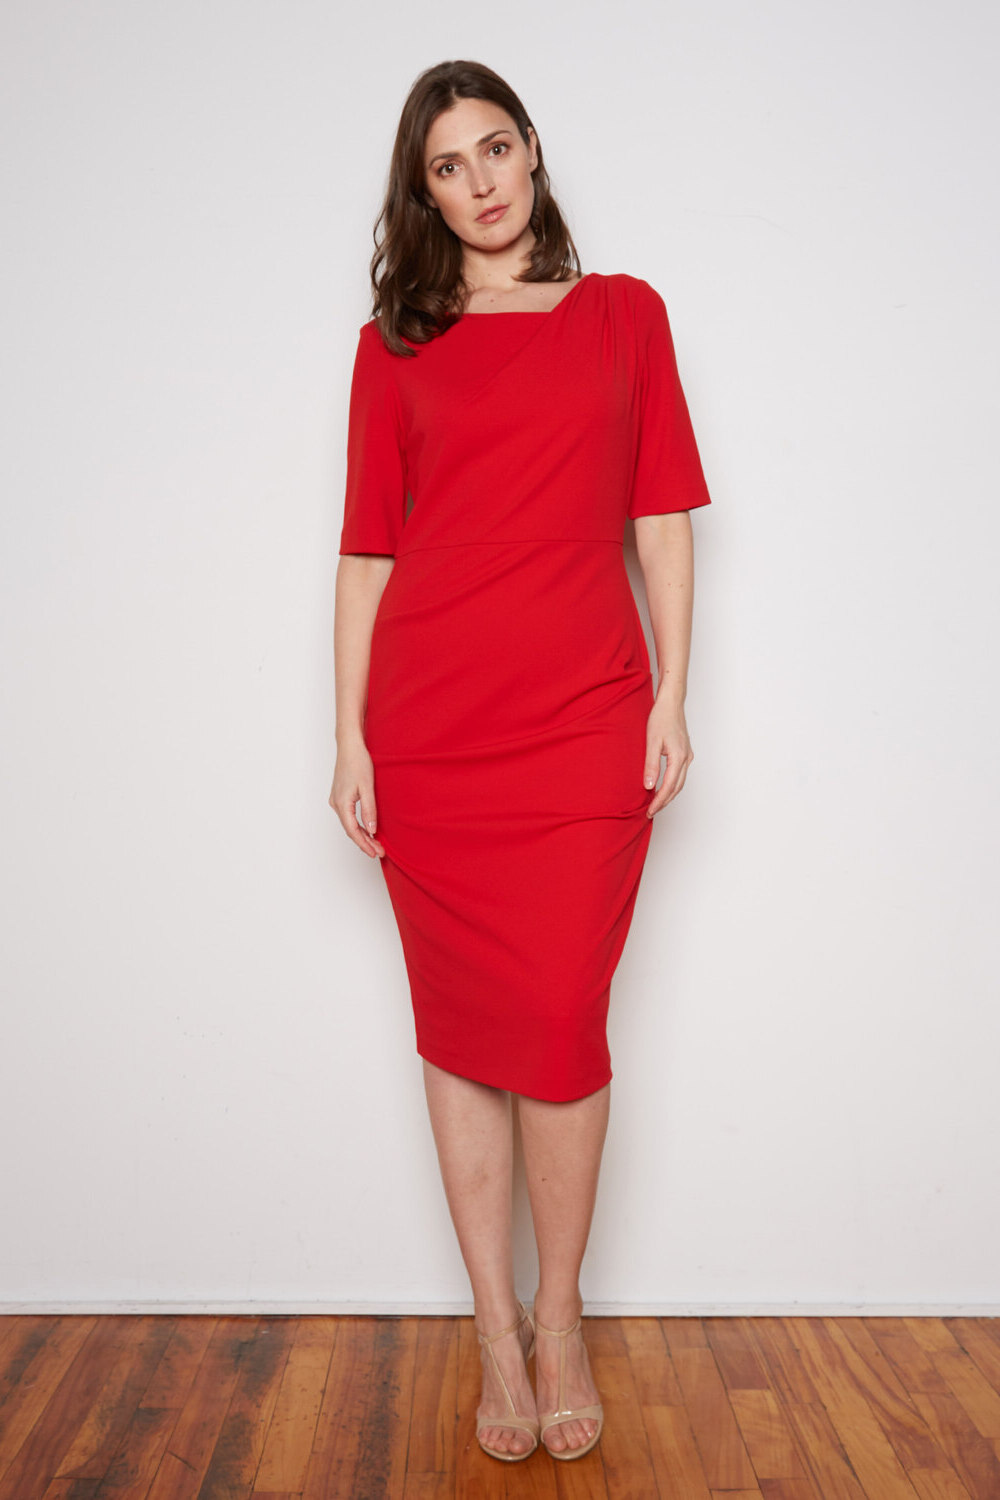 Joseph Ribkoff Dress Style 201500. Lipstick Red 173